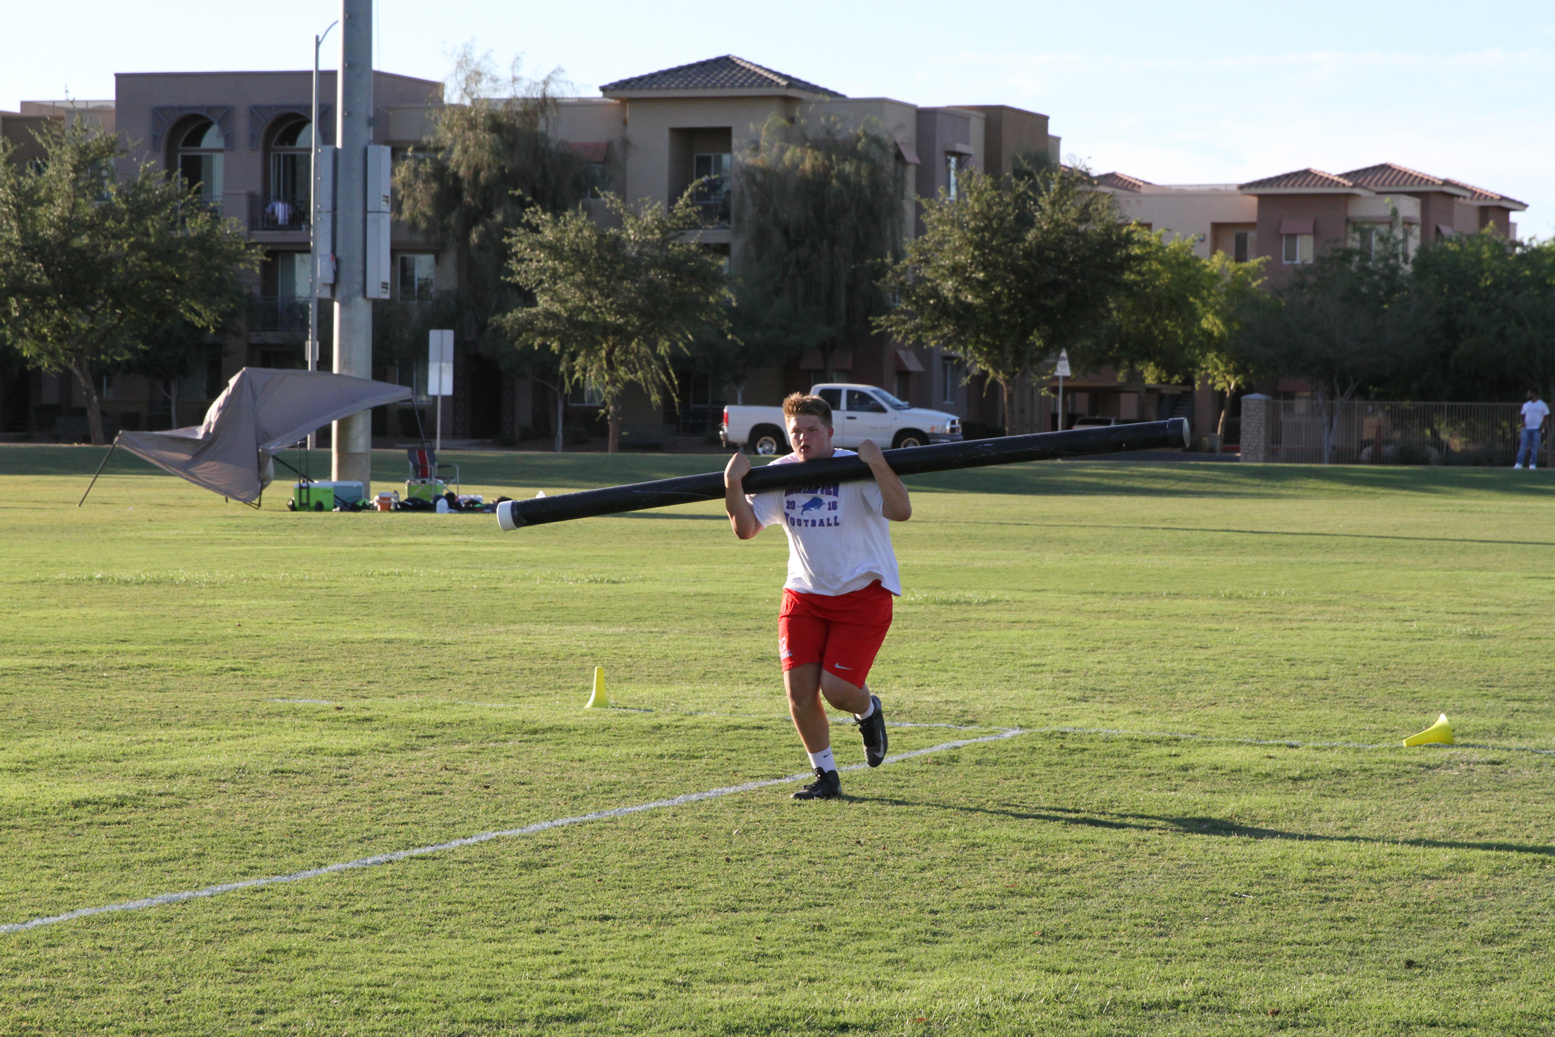 Football player carries a pole across a field